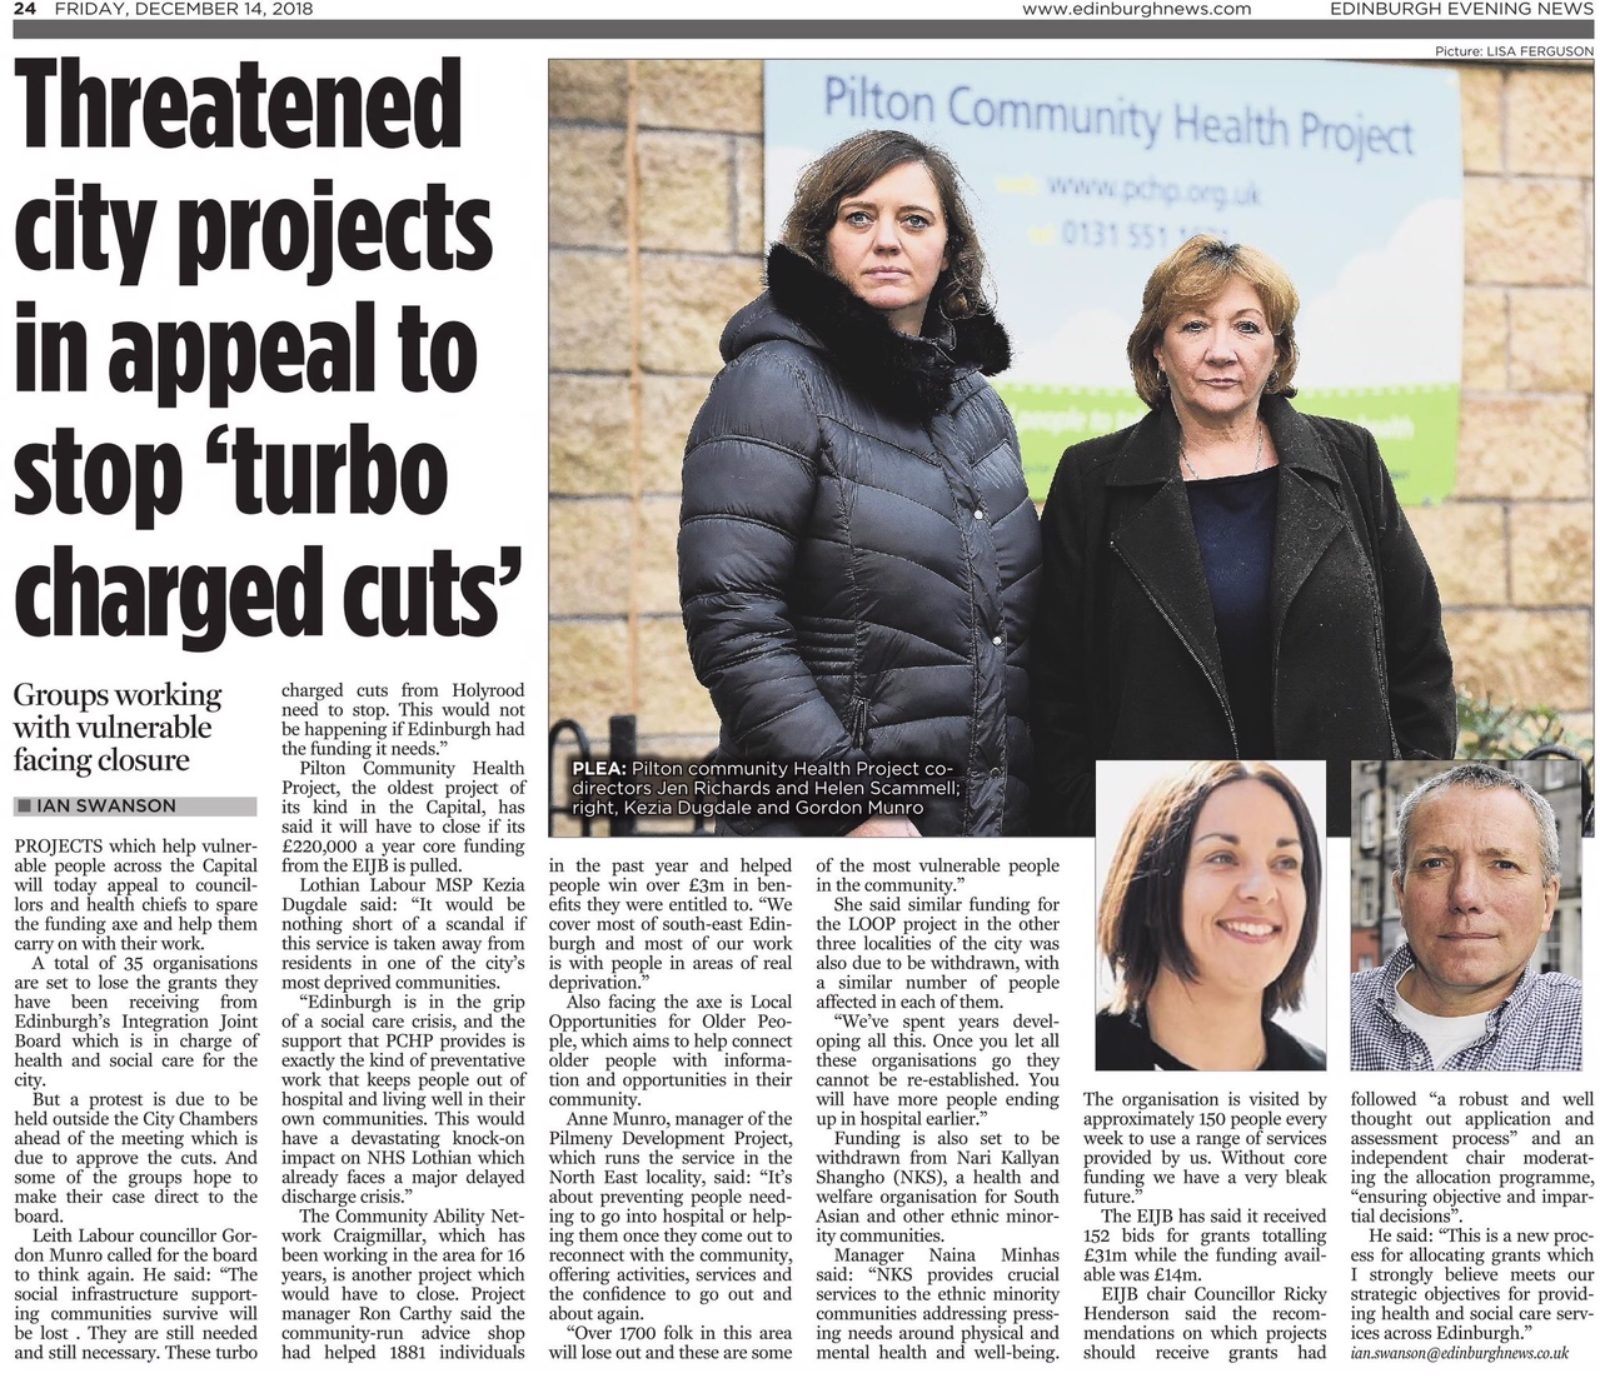 Edinburgh Evening News Article - Pilton Community Health Project Closure - 14 December 2018